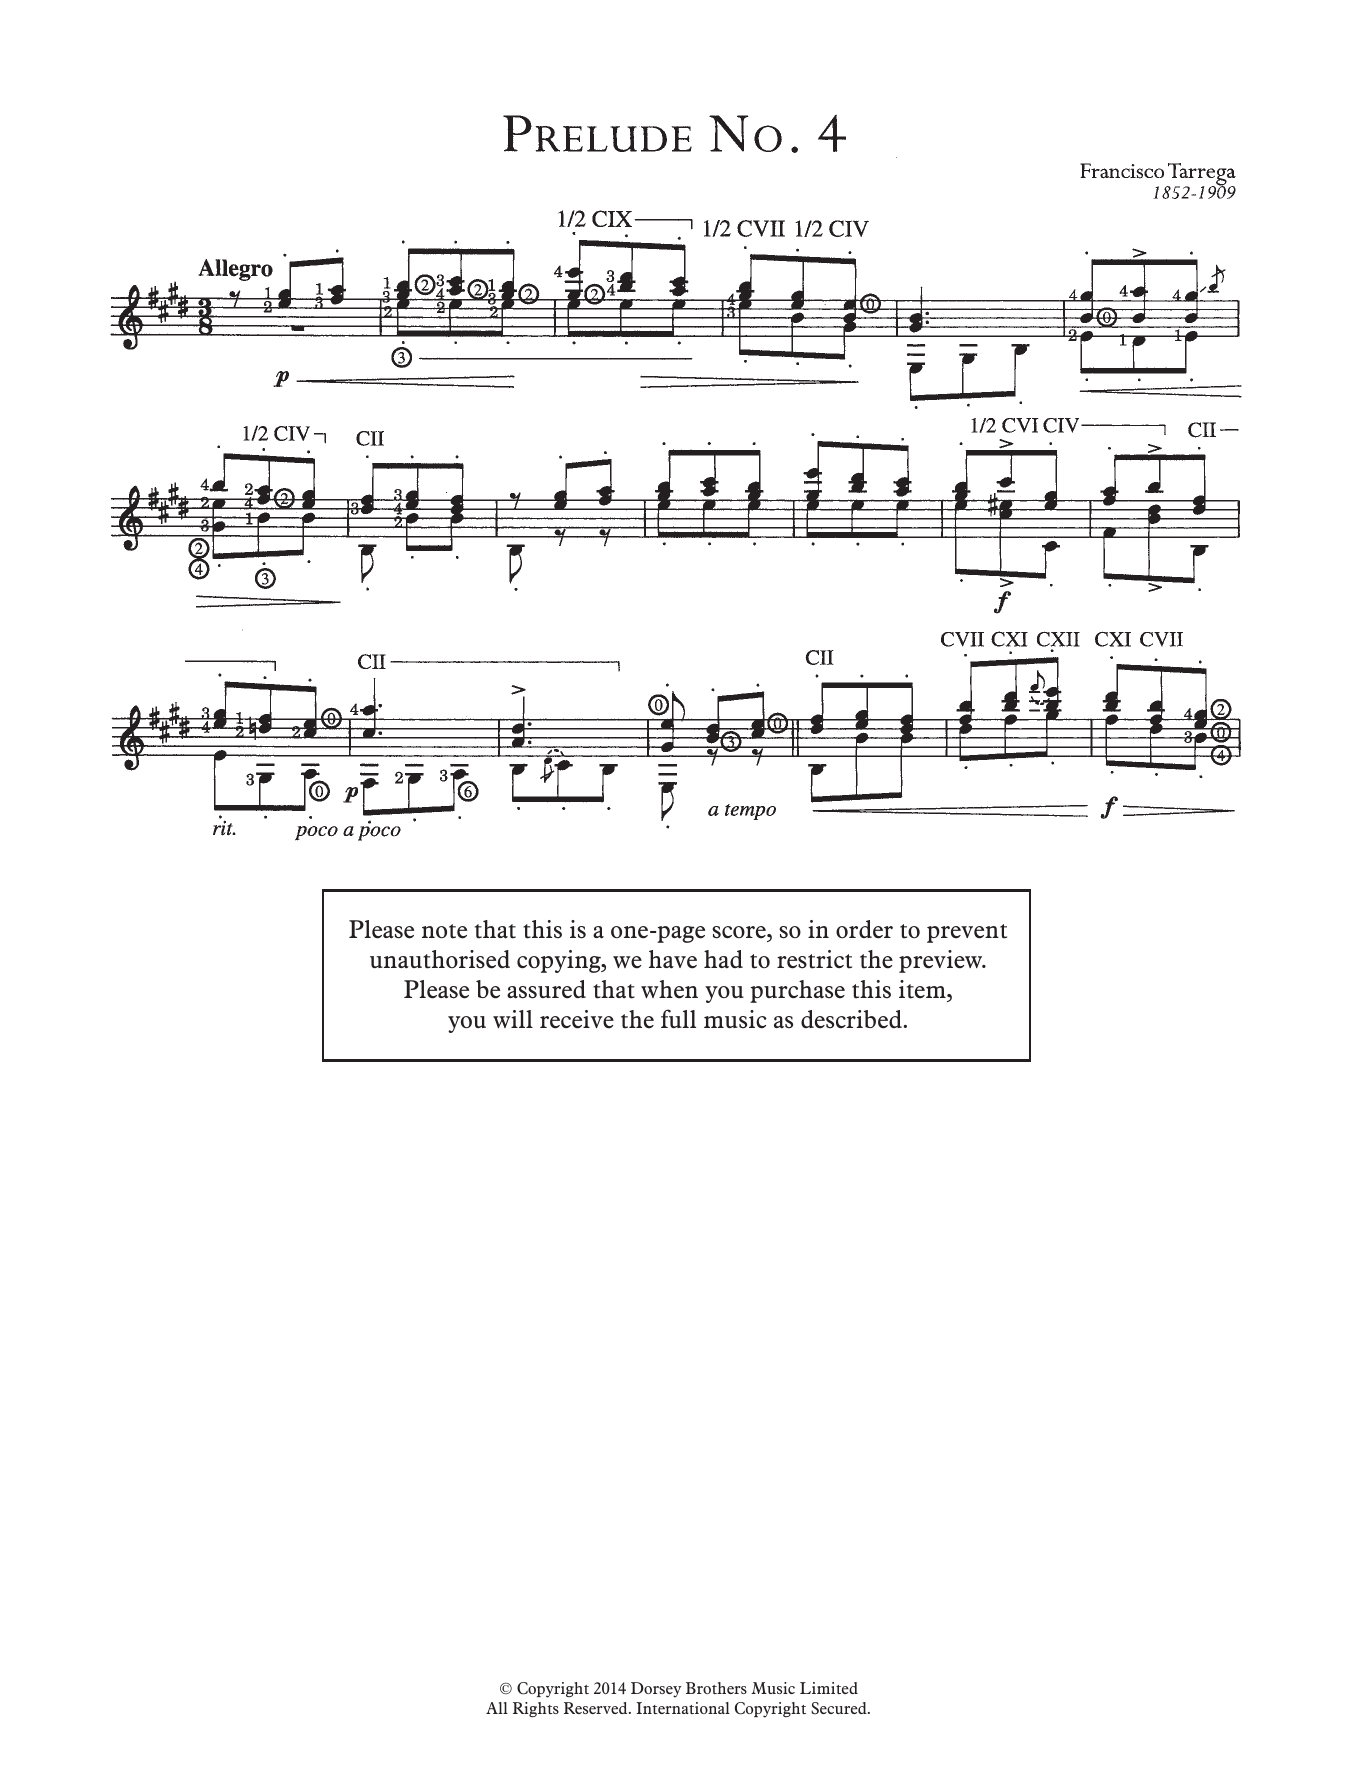 Francisco Tárrega Prelude No.4 Sheet Music Notes & Chords for Guitar - Download or Print PDF